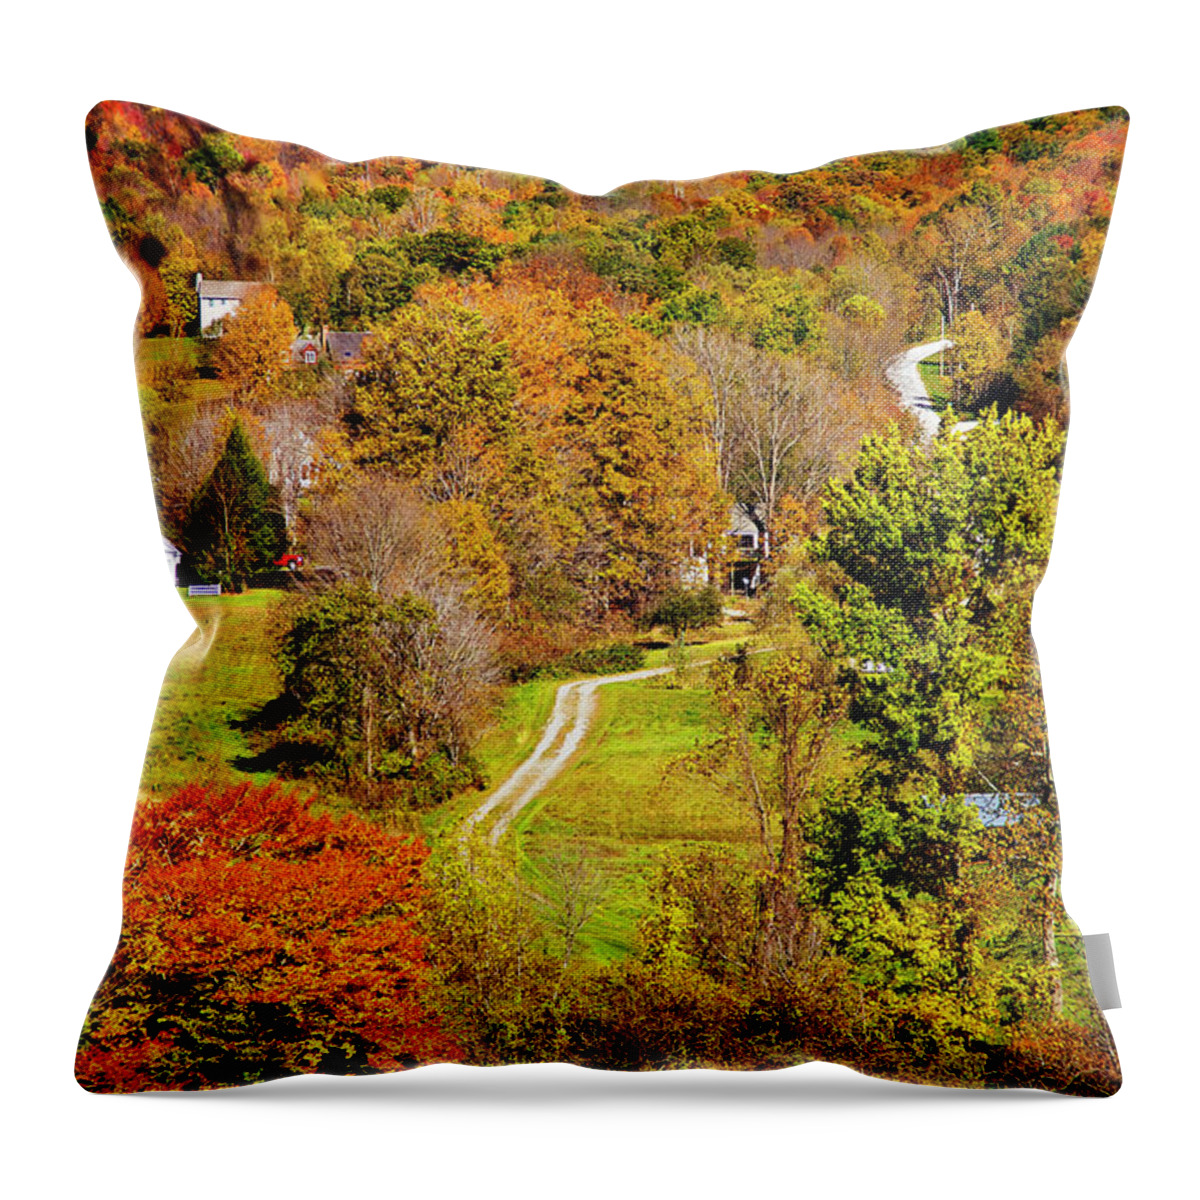 Estock Throw Pillow featuring the digital art Mountain Autumn Scene, Vermont by Claudia Uripos